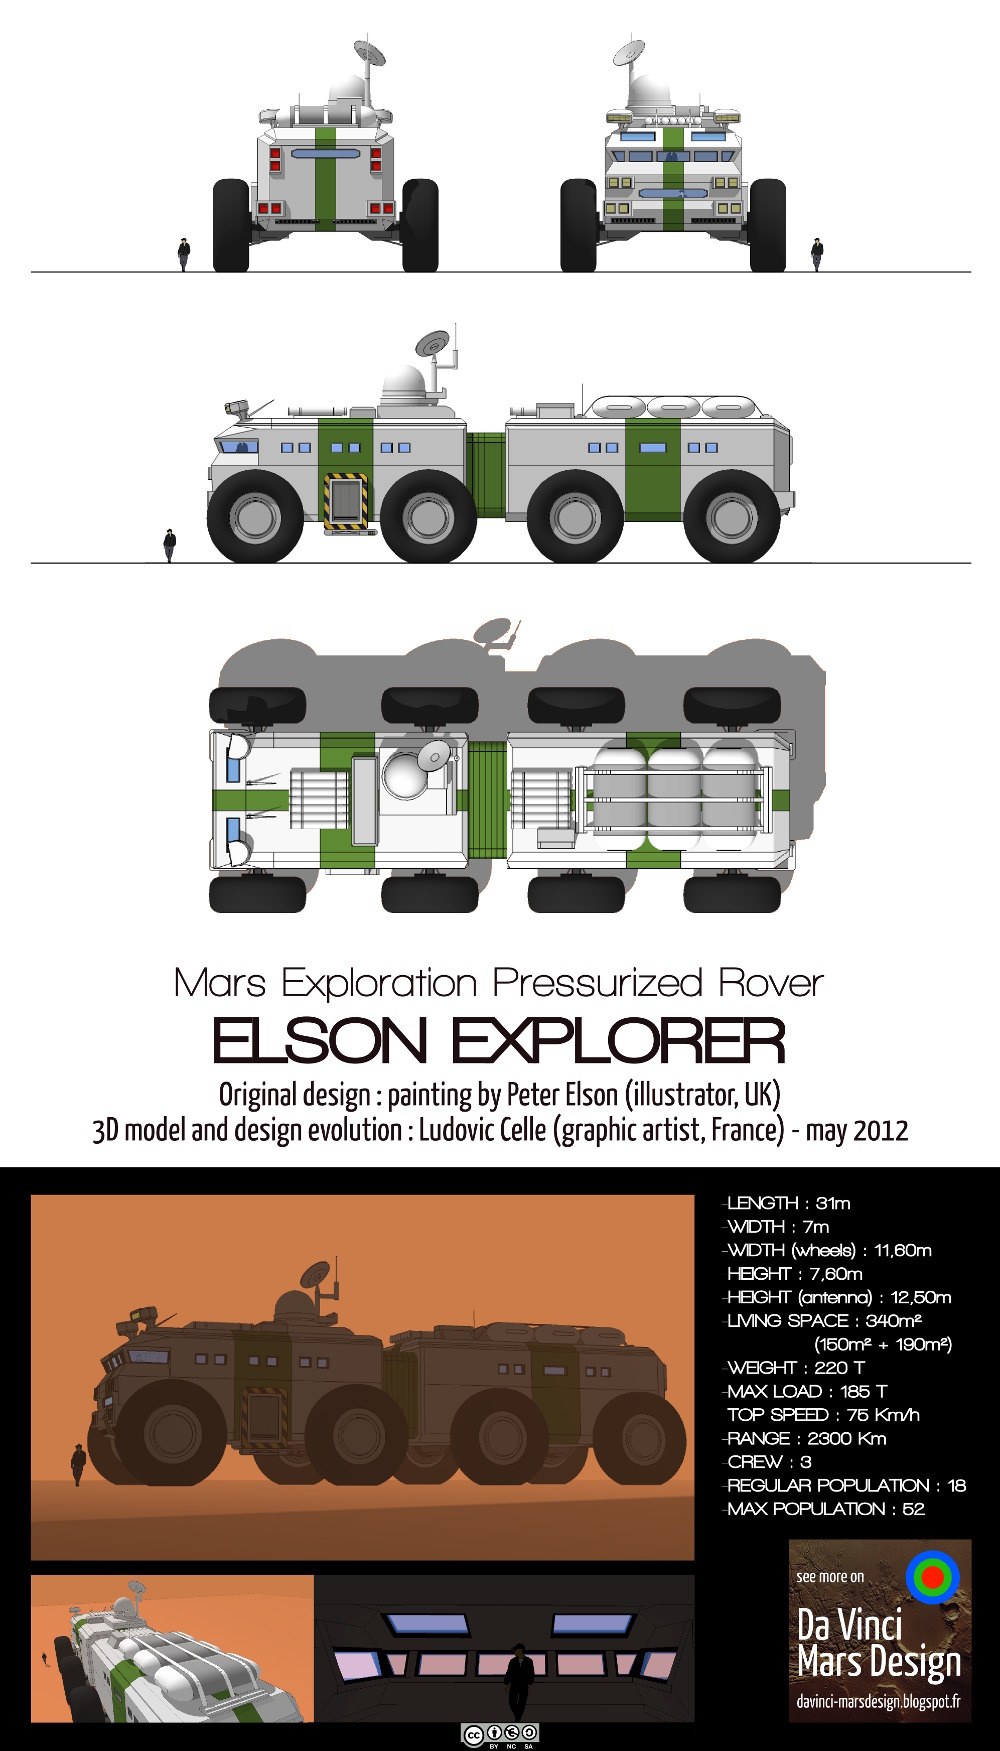 Mars Exploration Pressurized Rover (Elson Explorer) concept by Ludovic Celle